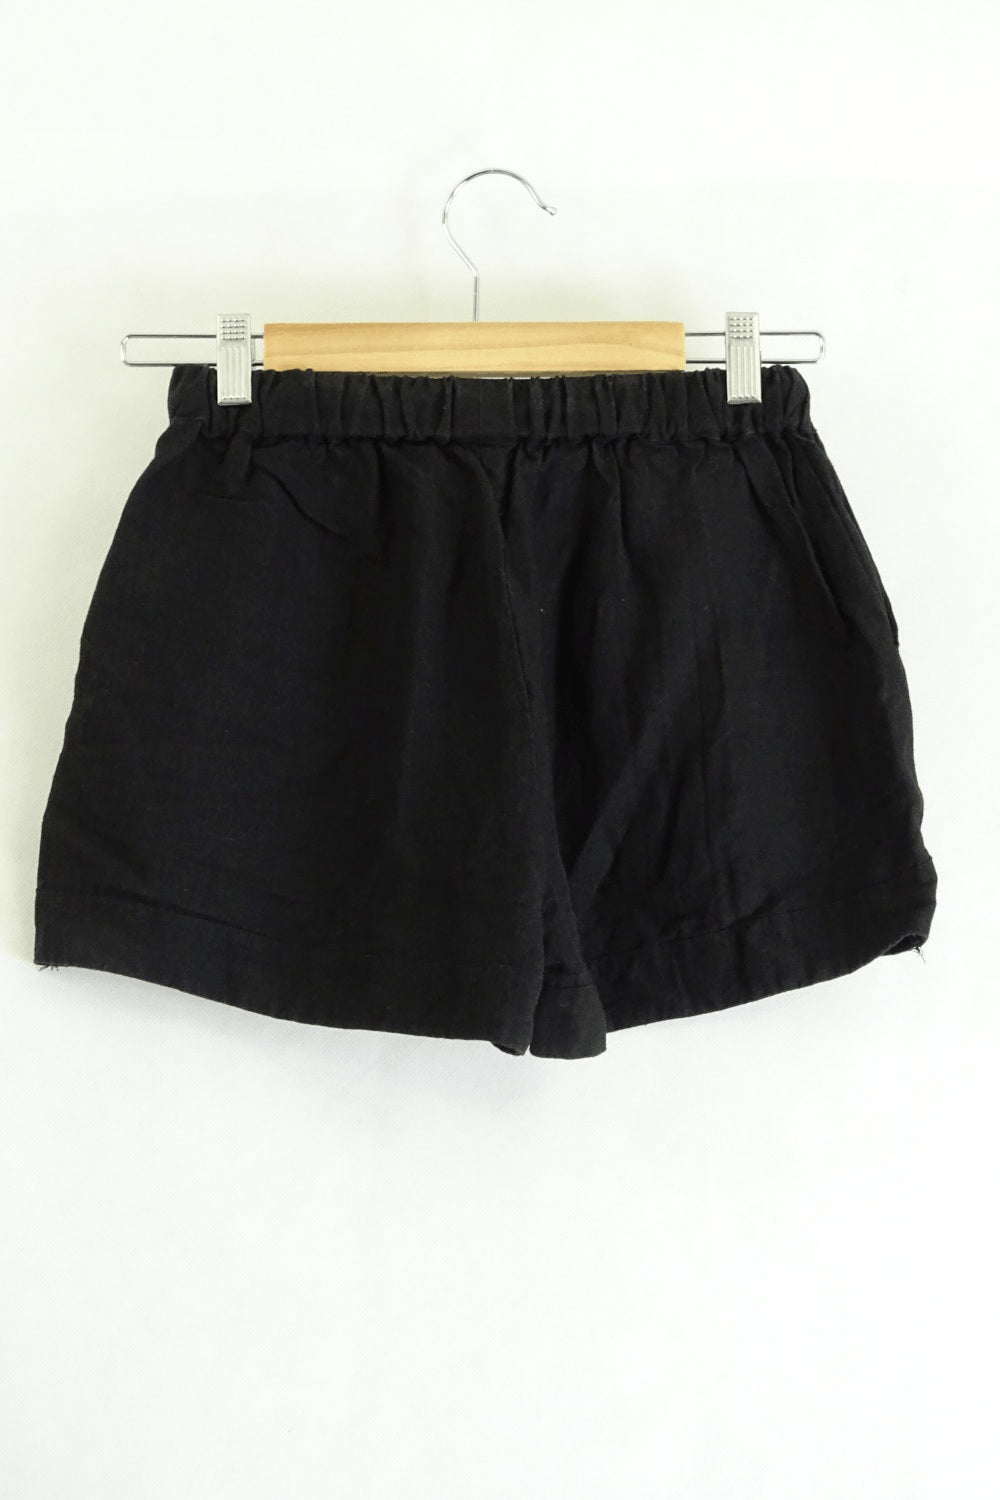 Huffer Black Casual Shorts 8